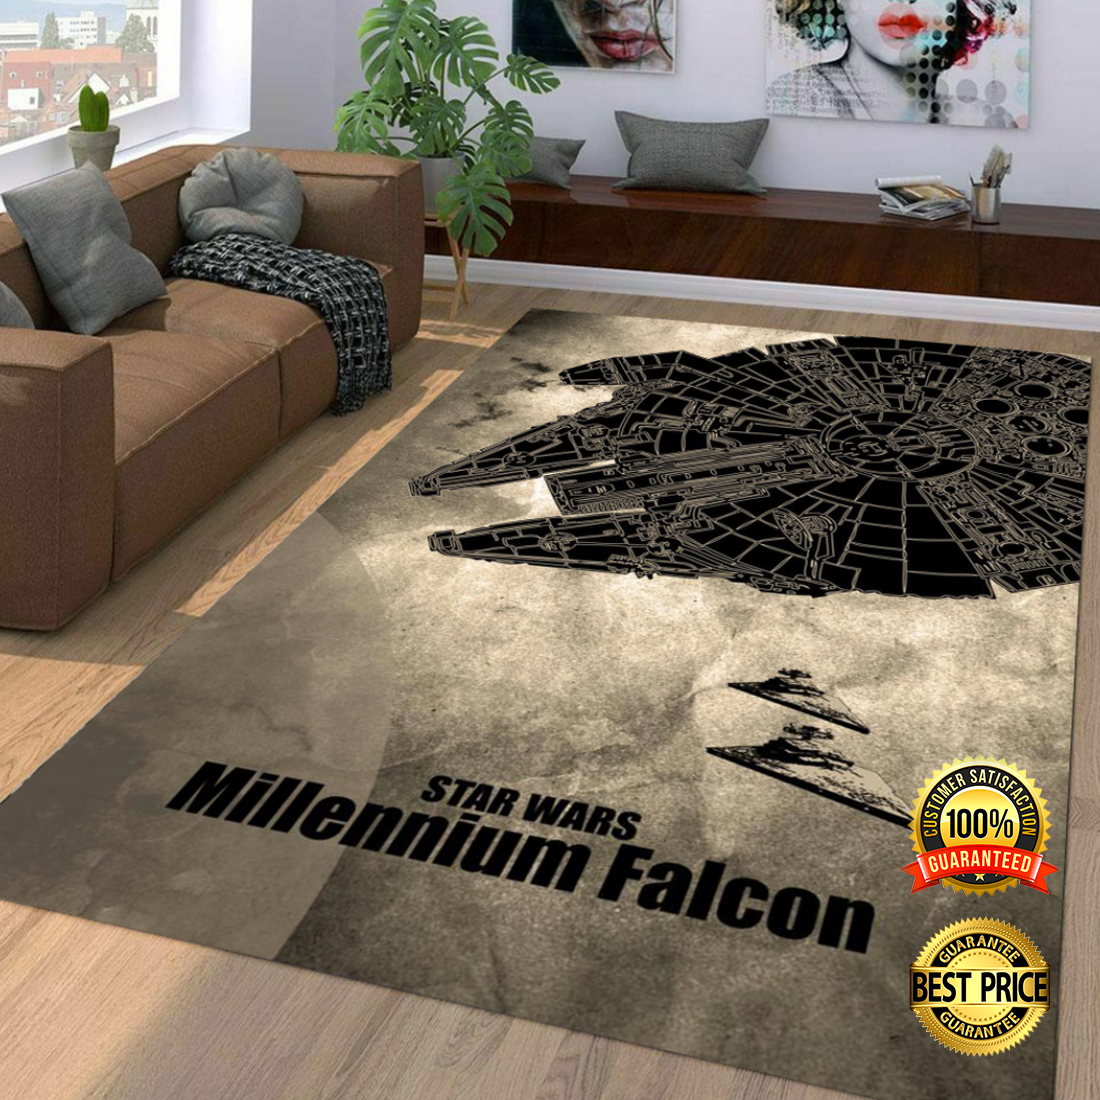 Star Wars Millennium Falcon rug 4